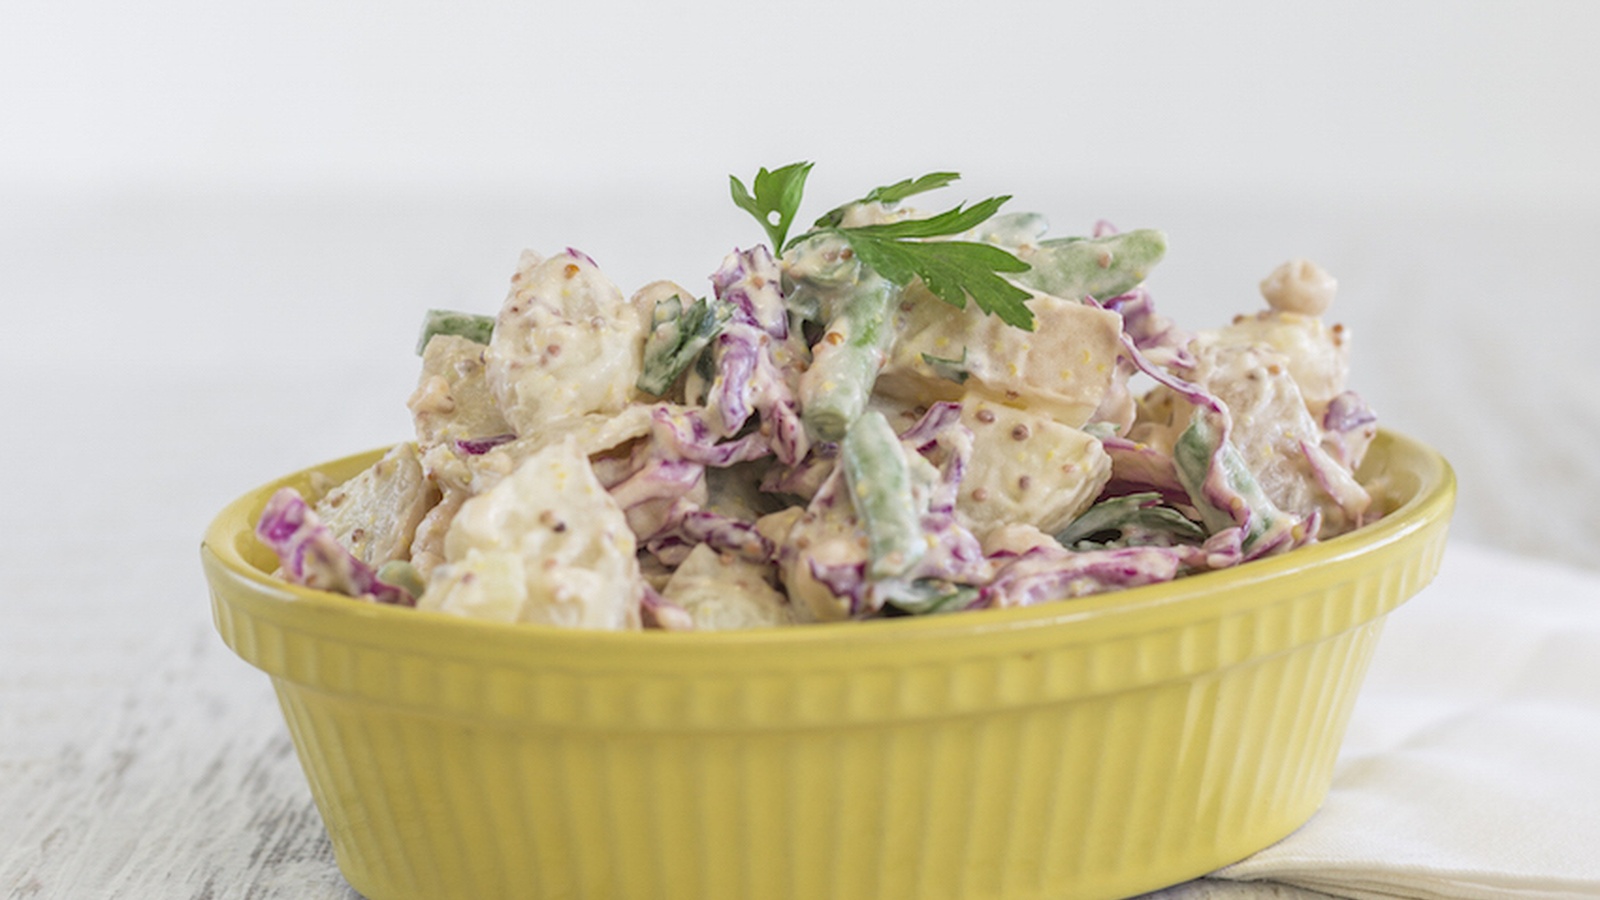 Fresh Sides: The Traditional Potato Salad Has Had A Make-Over